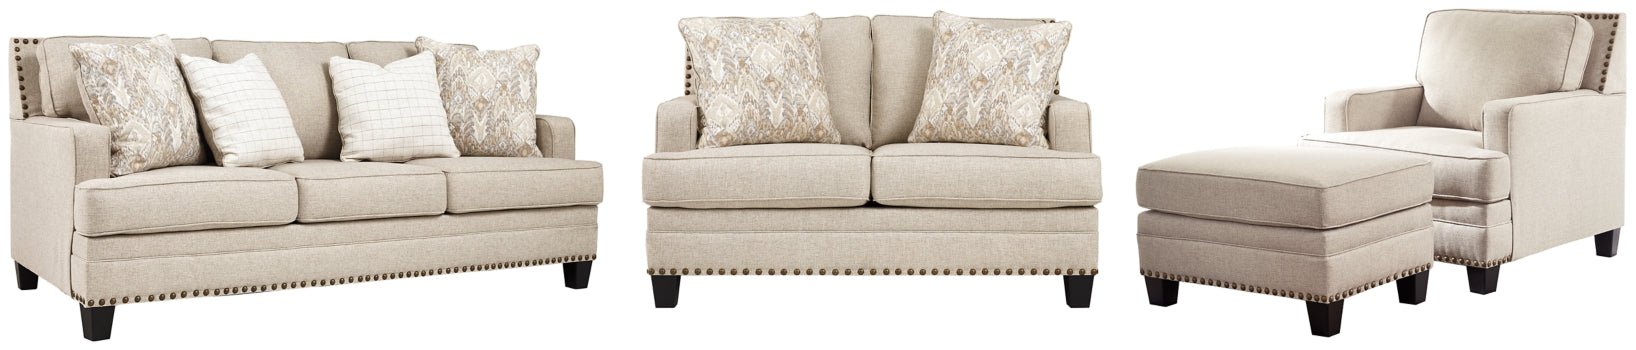 Claredon Sofa, Loveseat, Chair and Ottoman - furniture place usa